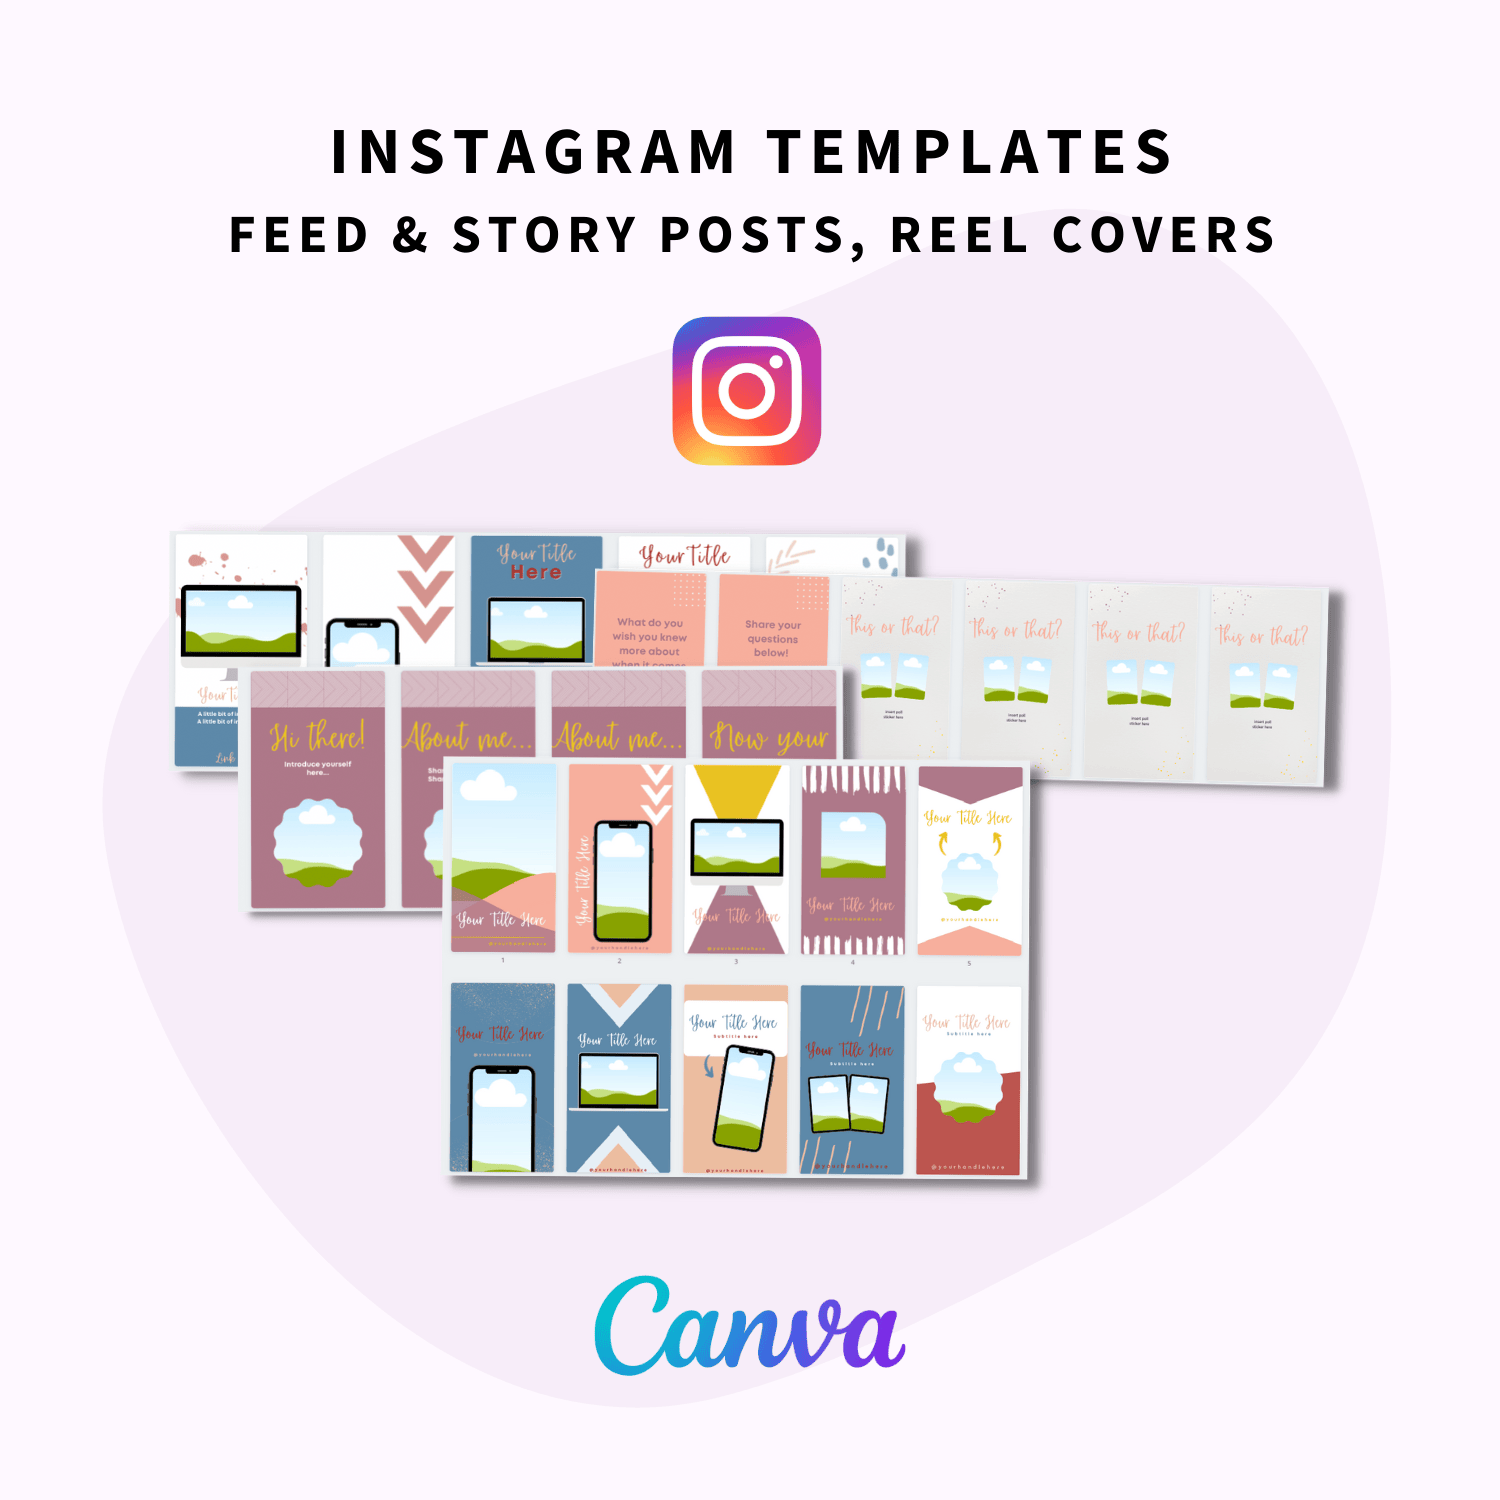 Instagram templates in the Social Media Super Bundle Toolbox